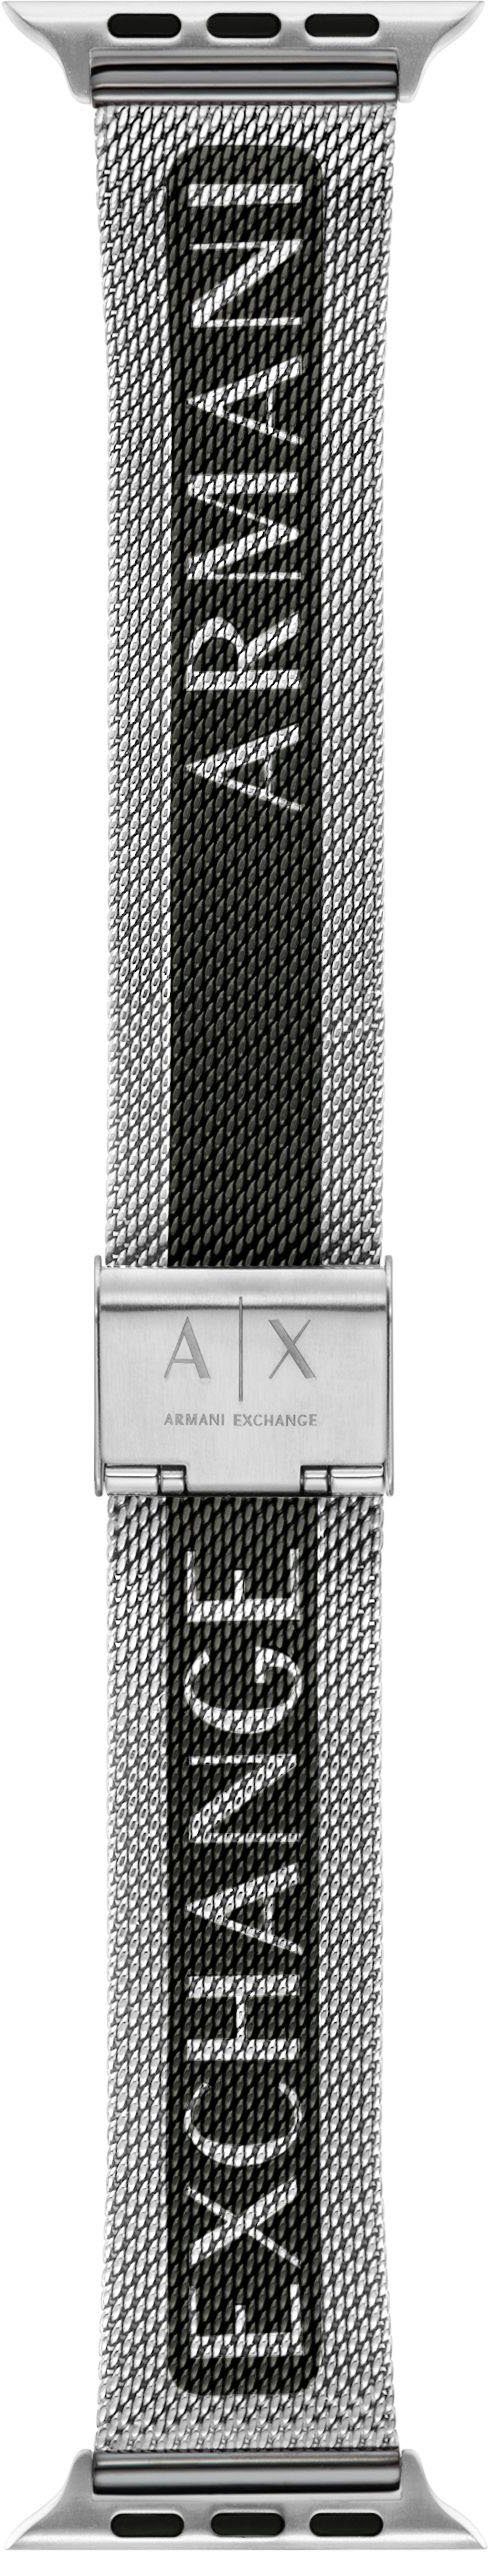 ARMANI EXCHANGE ideal BAND, AXS8029, Smartwatch-Armband als Geschenk auch APPLE